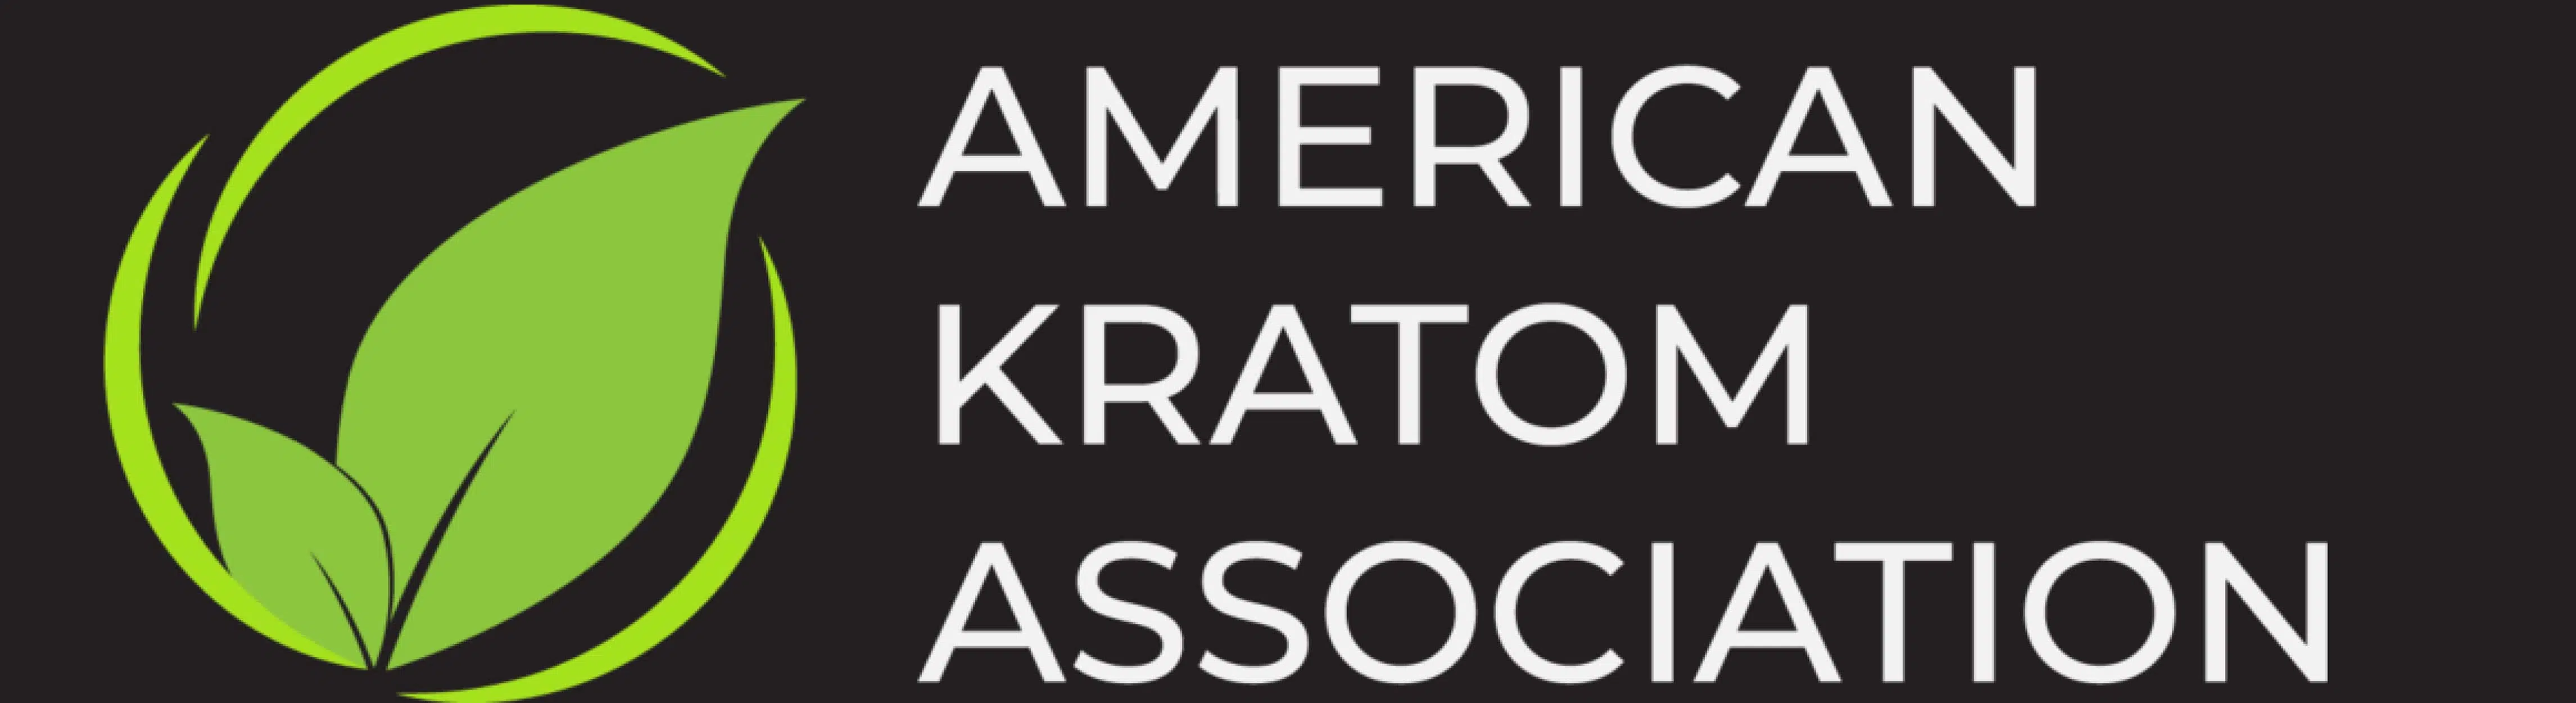 American Kratom Association logo